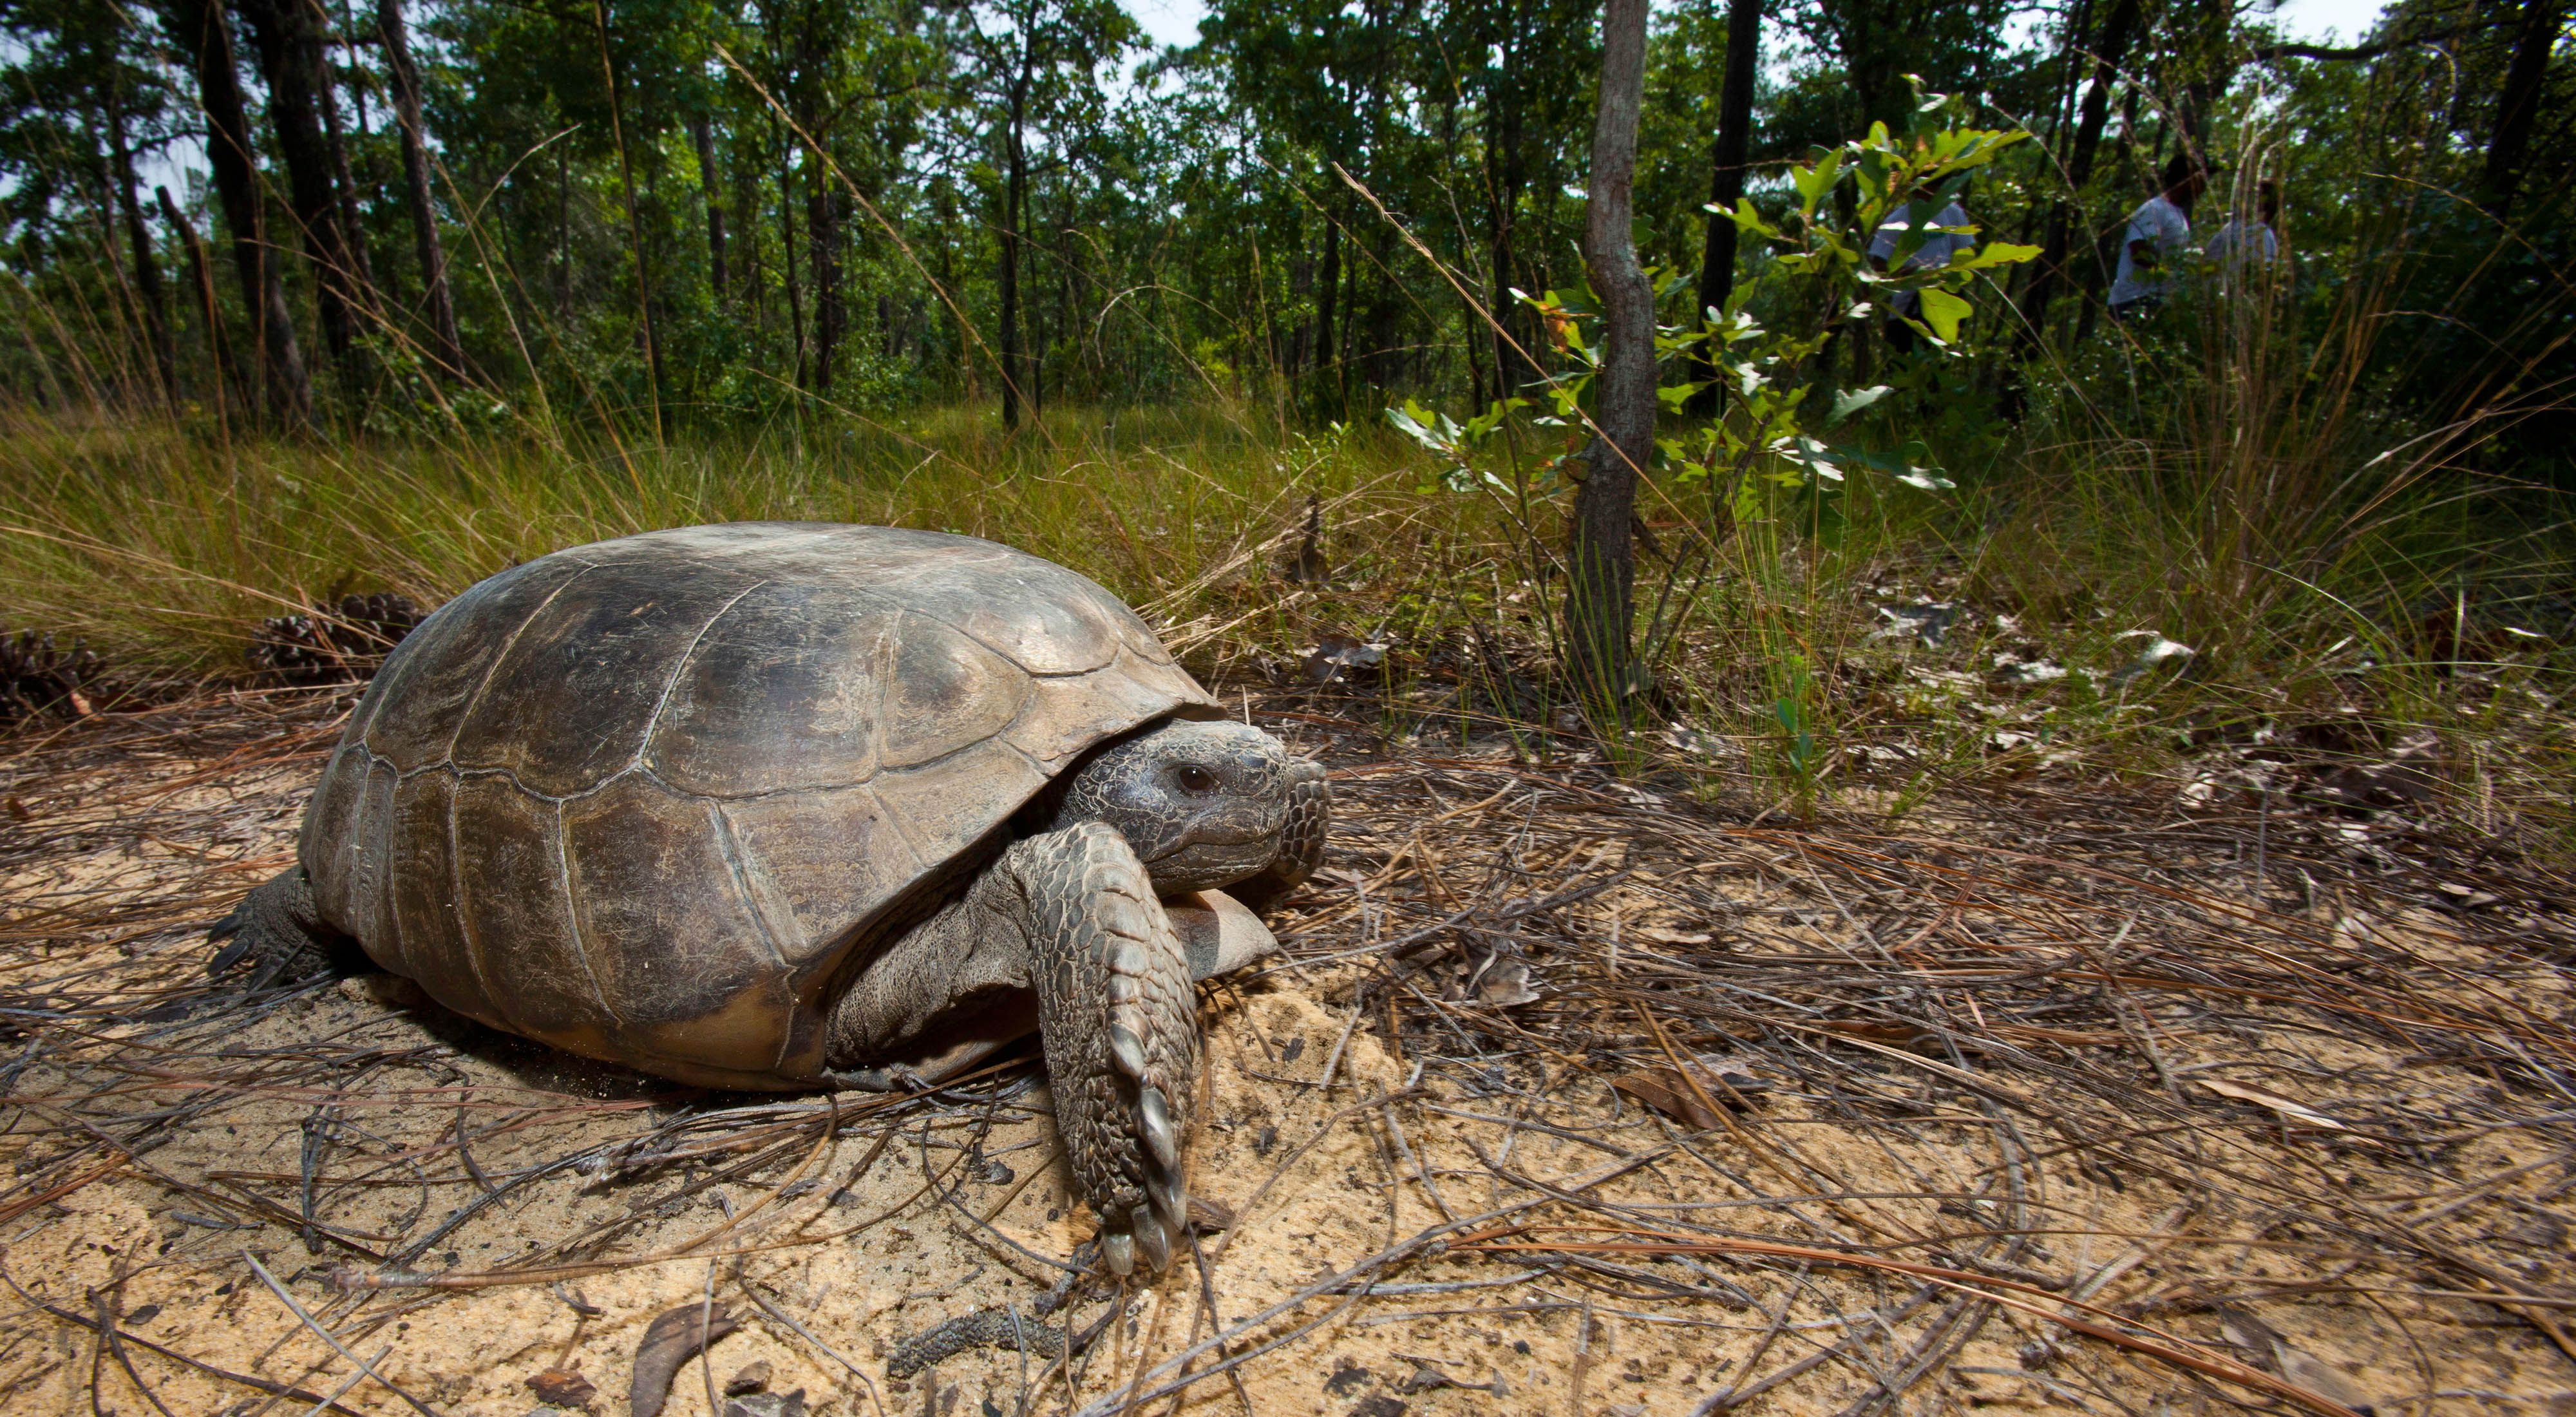 An adult gopher tortoise on the sandy soils of longleaf pine savanna.